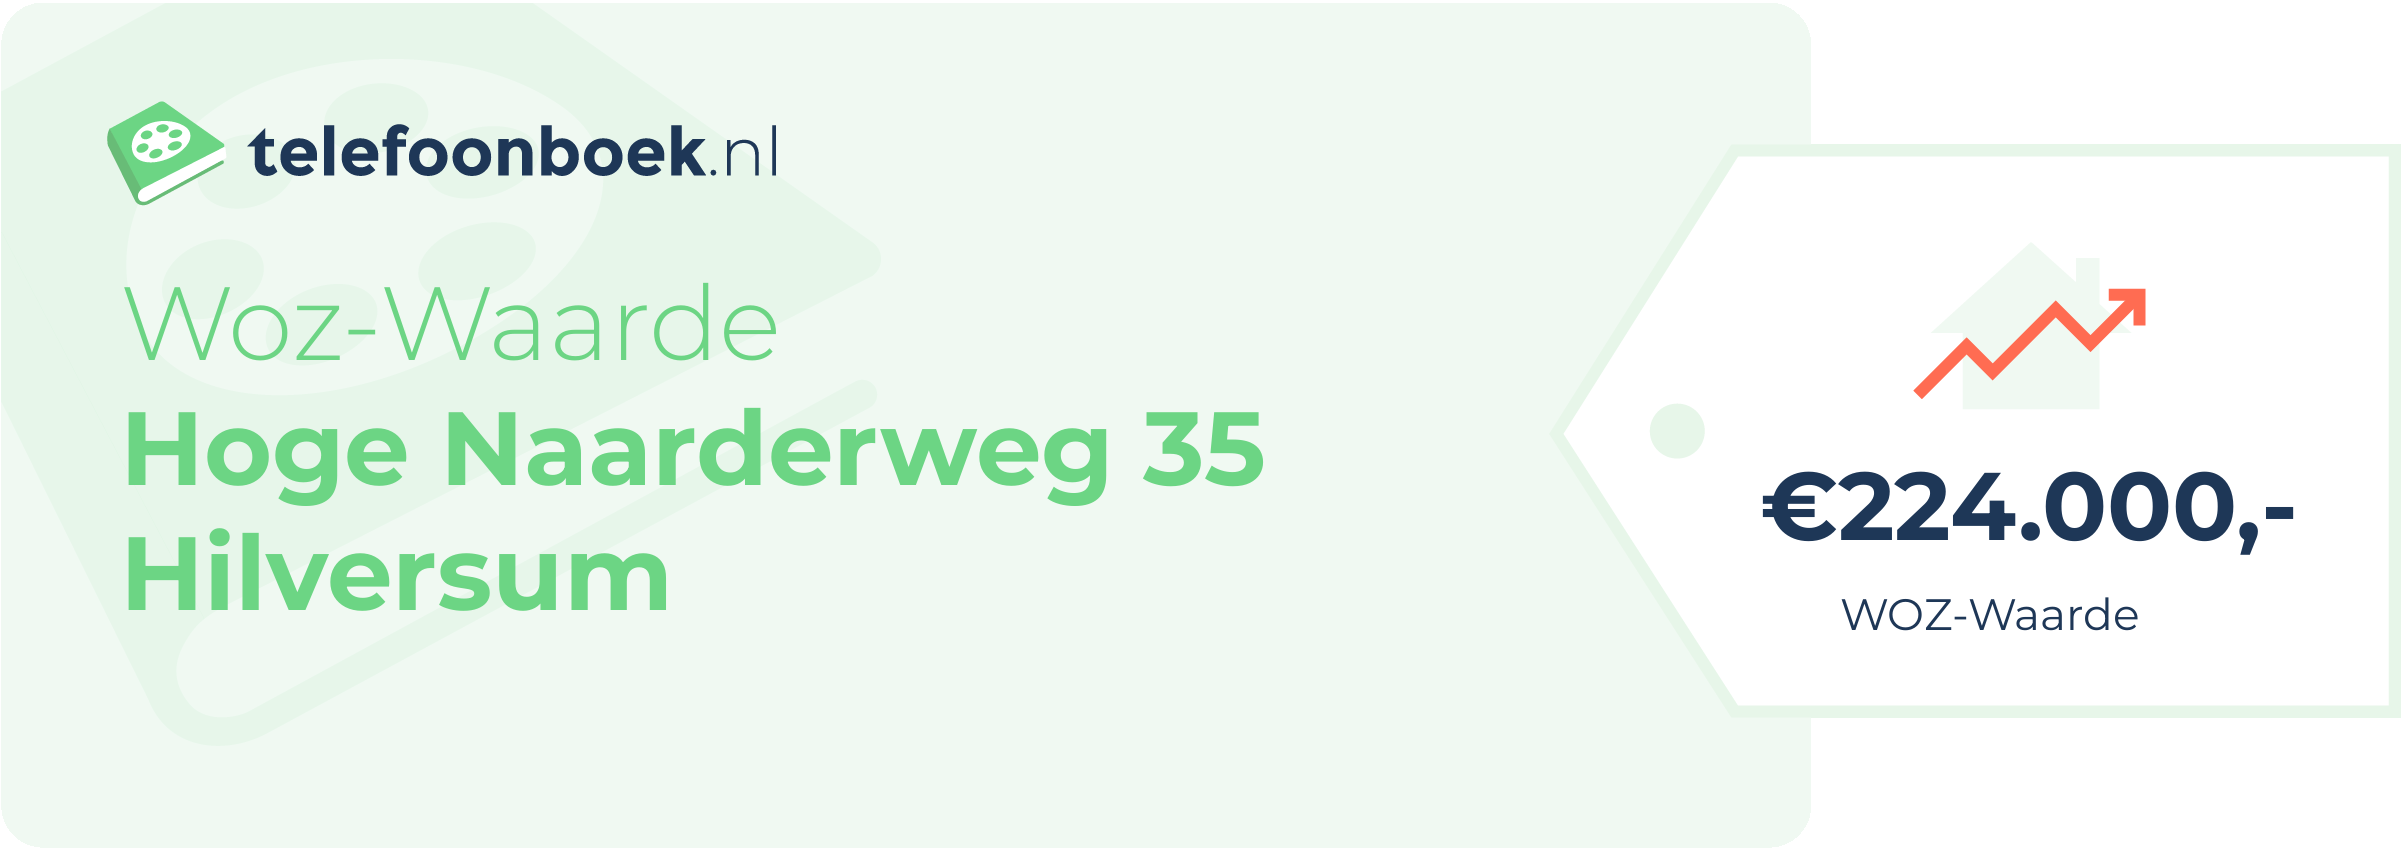 WOZ-waarde Hoge Naarderweg 35 Hilversum